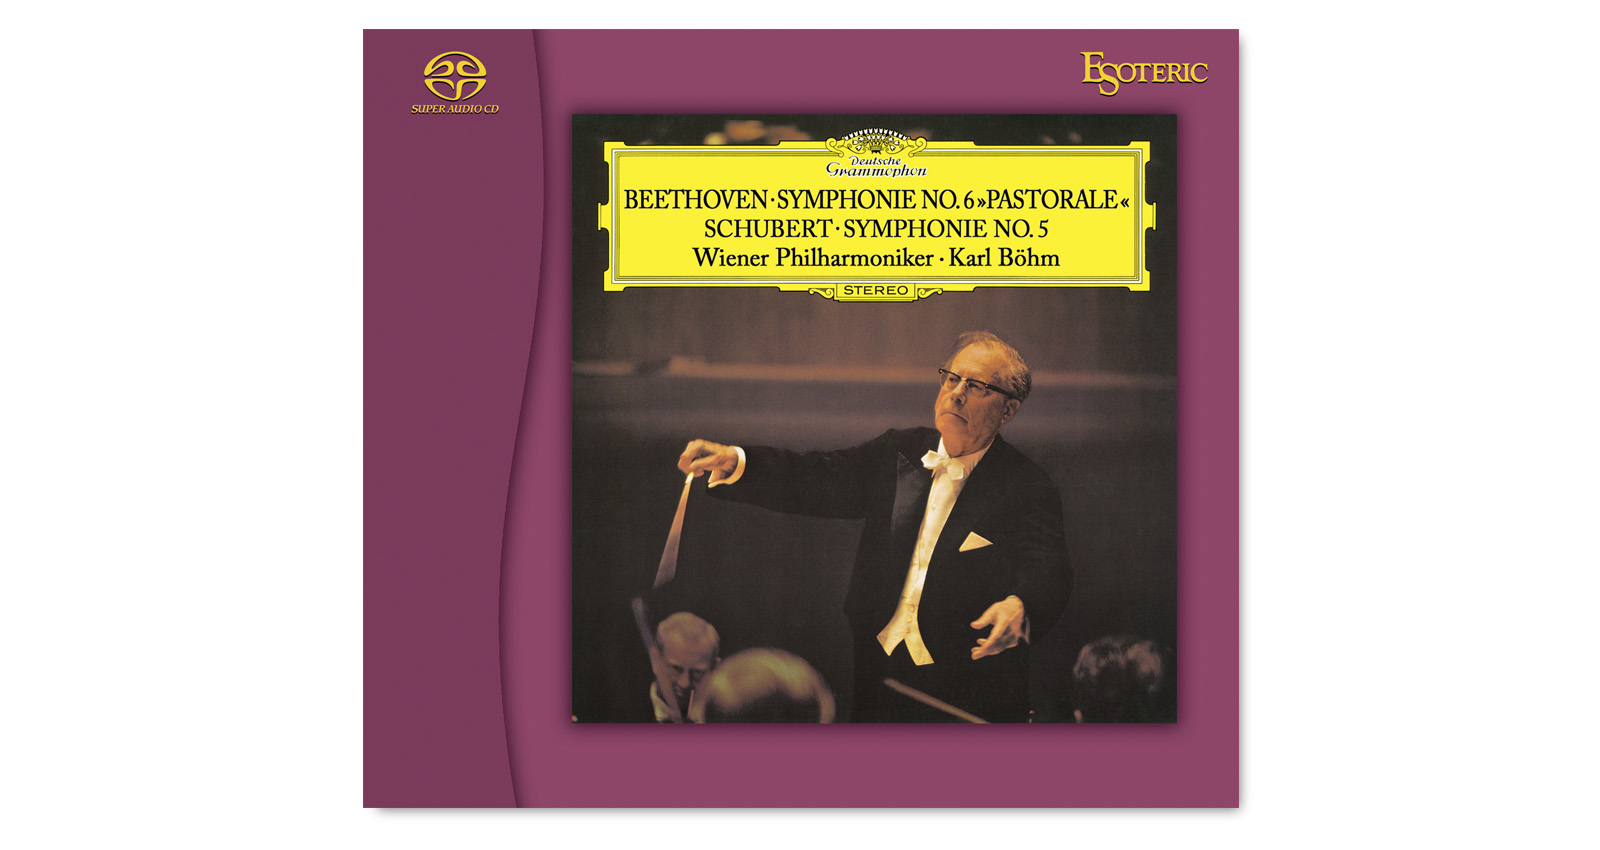 Beethoven Symphonie No.6 Pastorale | Schubert Symphonie No.5